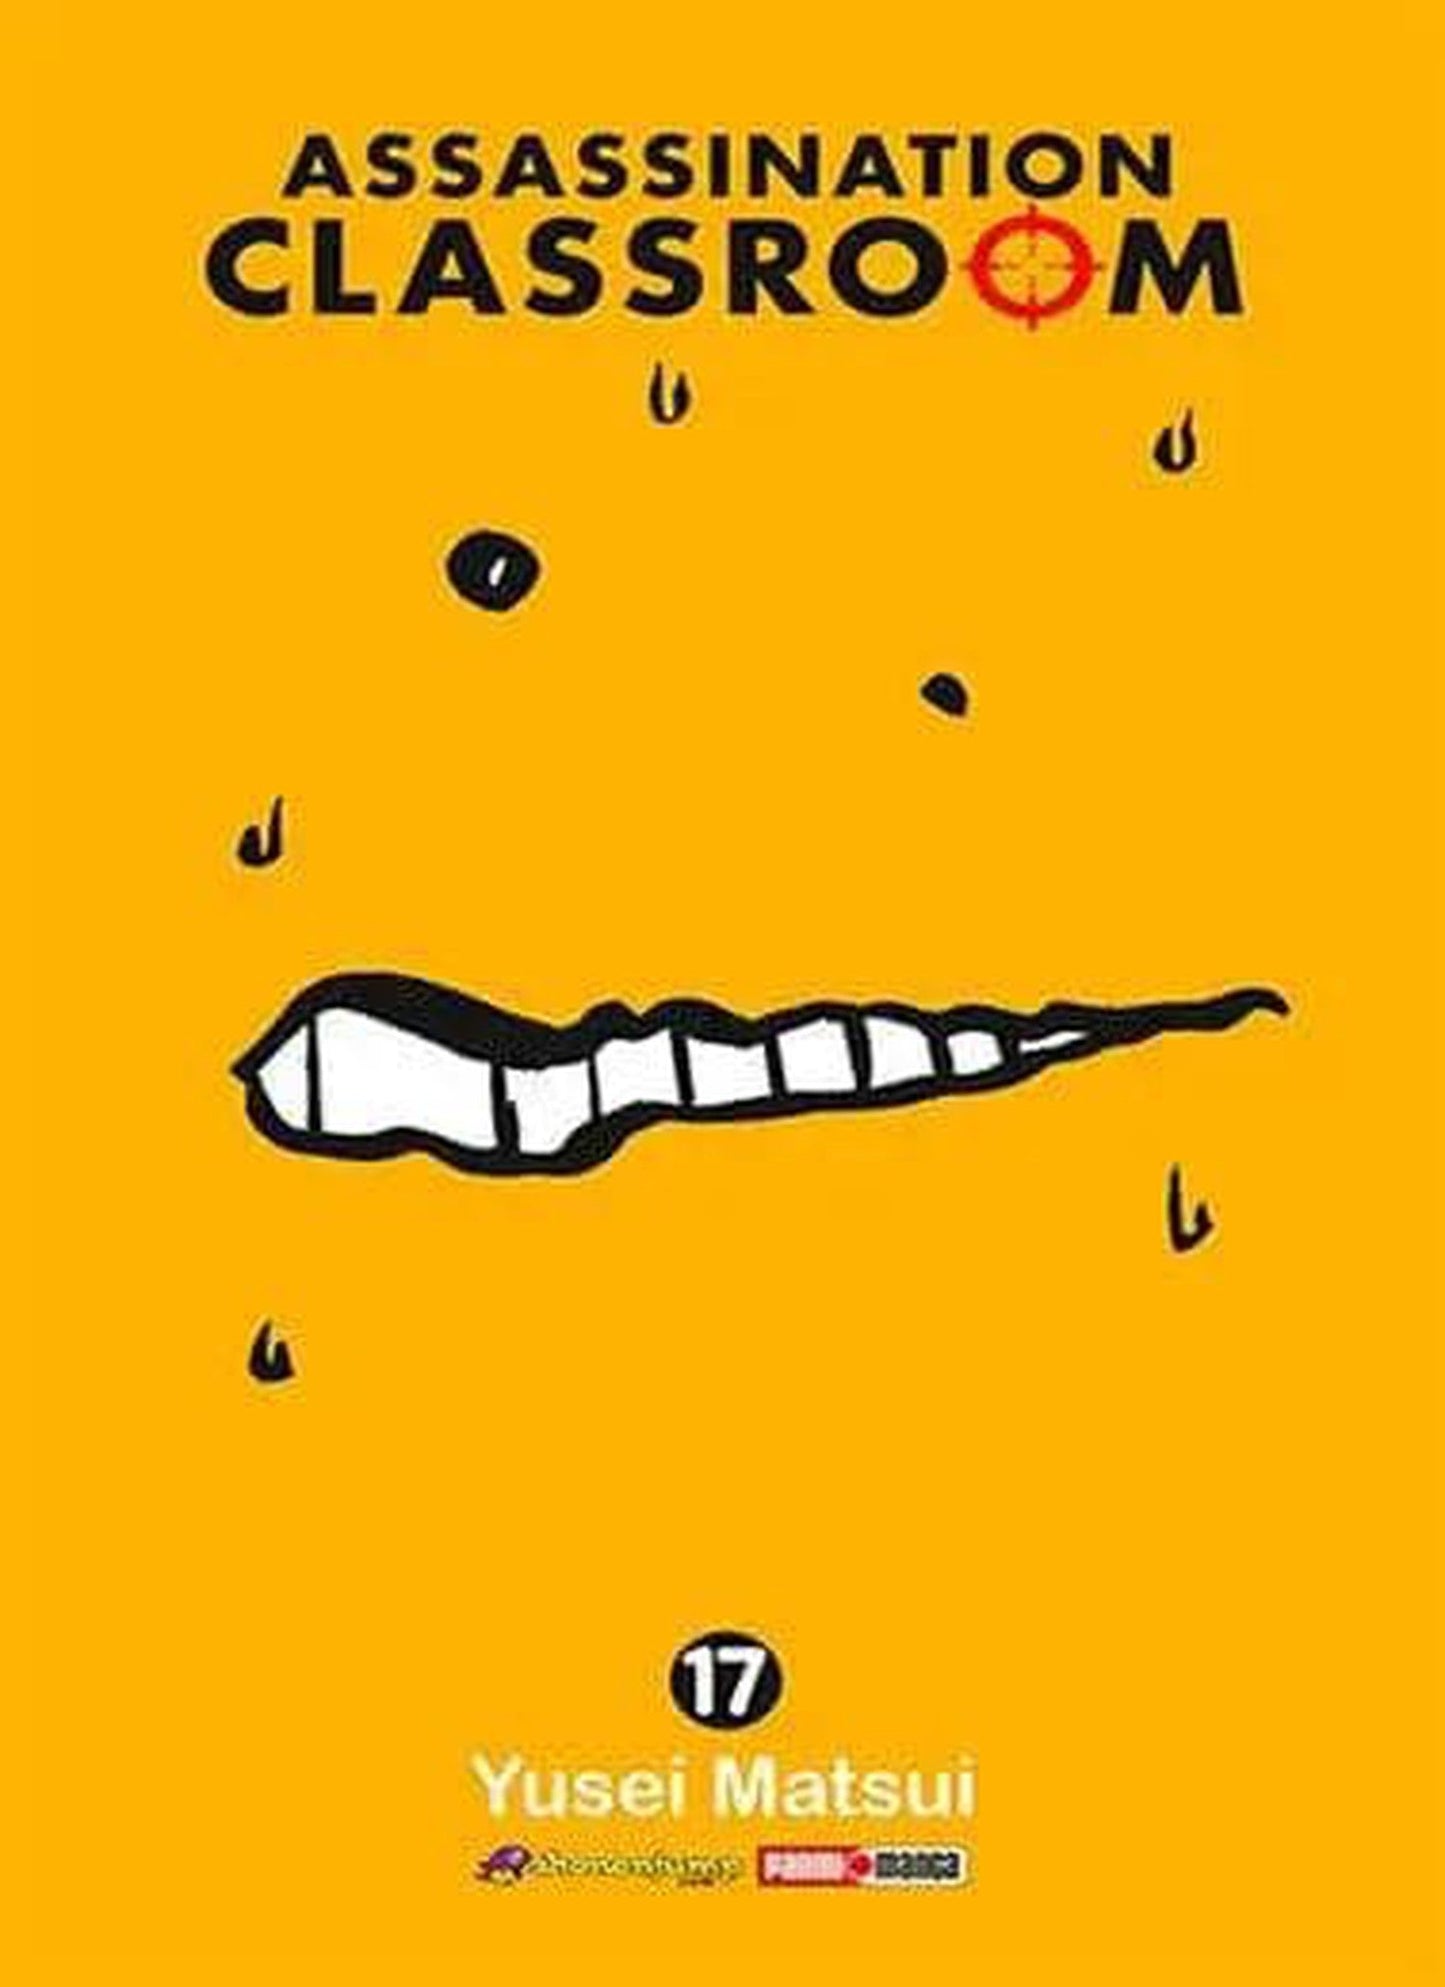 Assassination Classroom #17